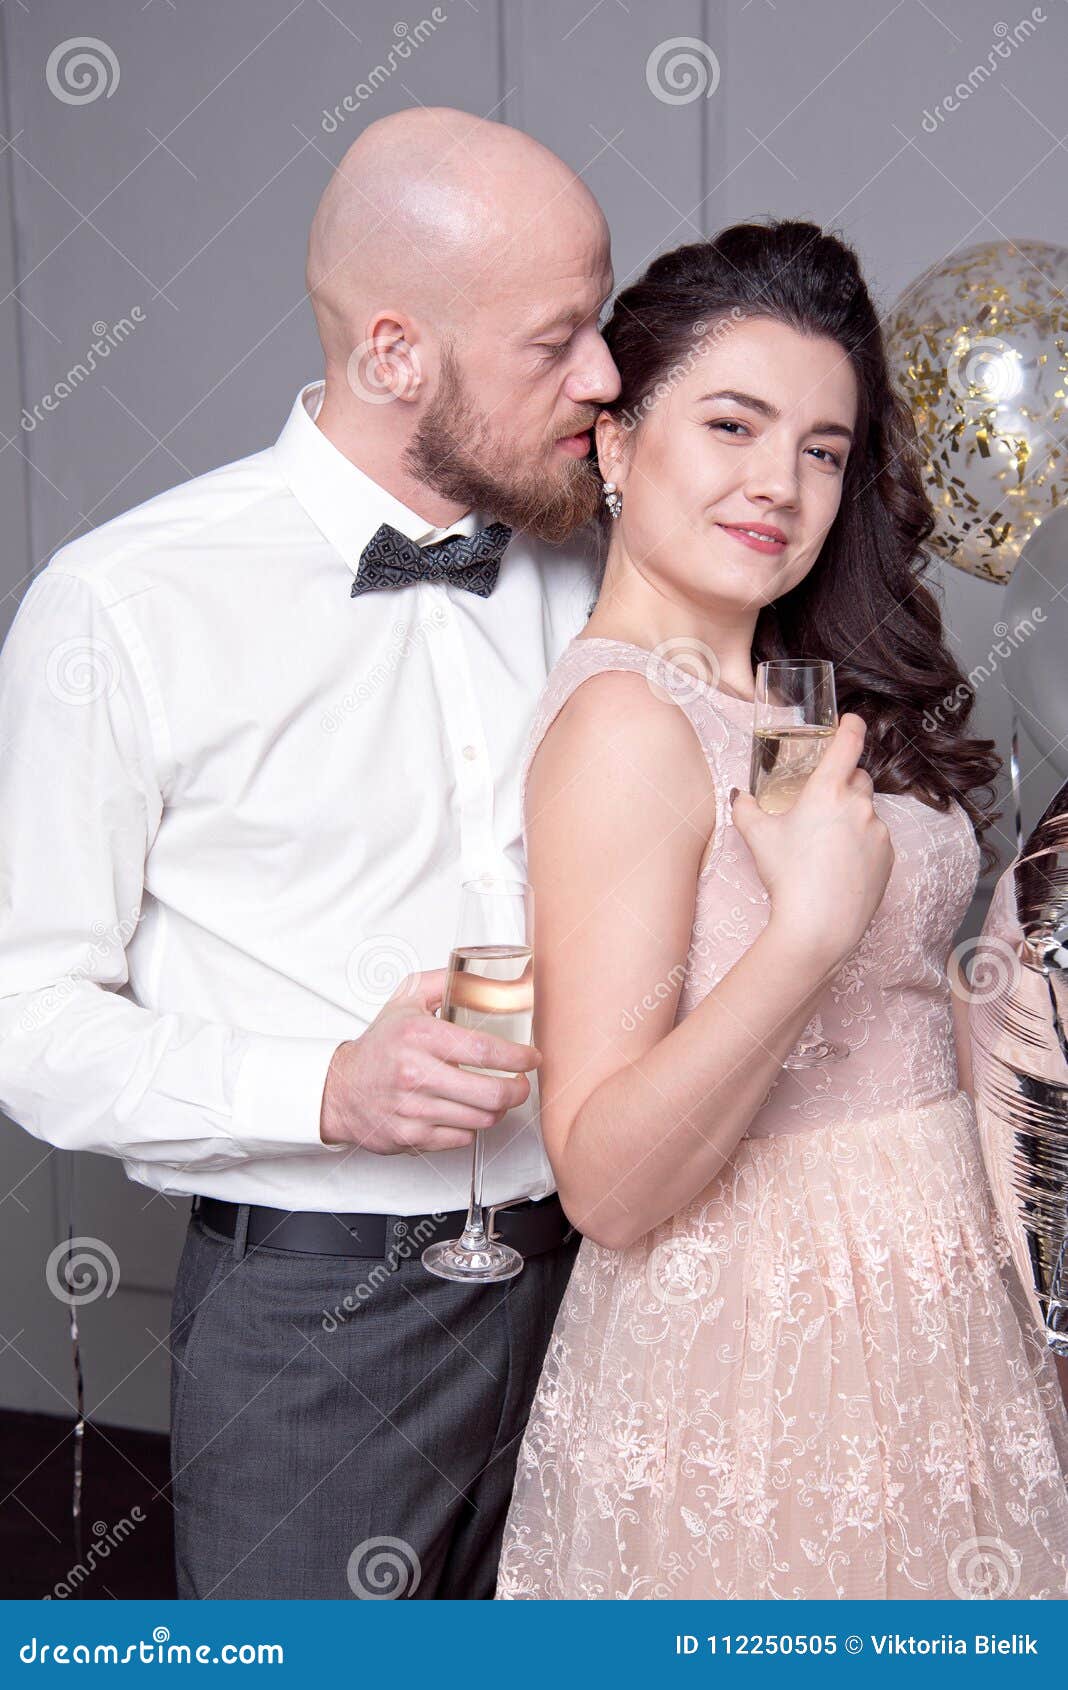 handsome-bald-man-beard-hugs-her-girlfriend-men-glass-champagne-112250505.jpg